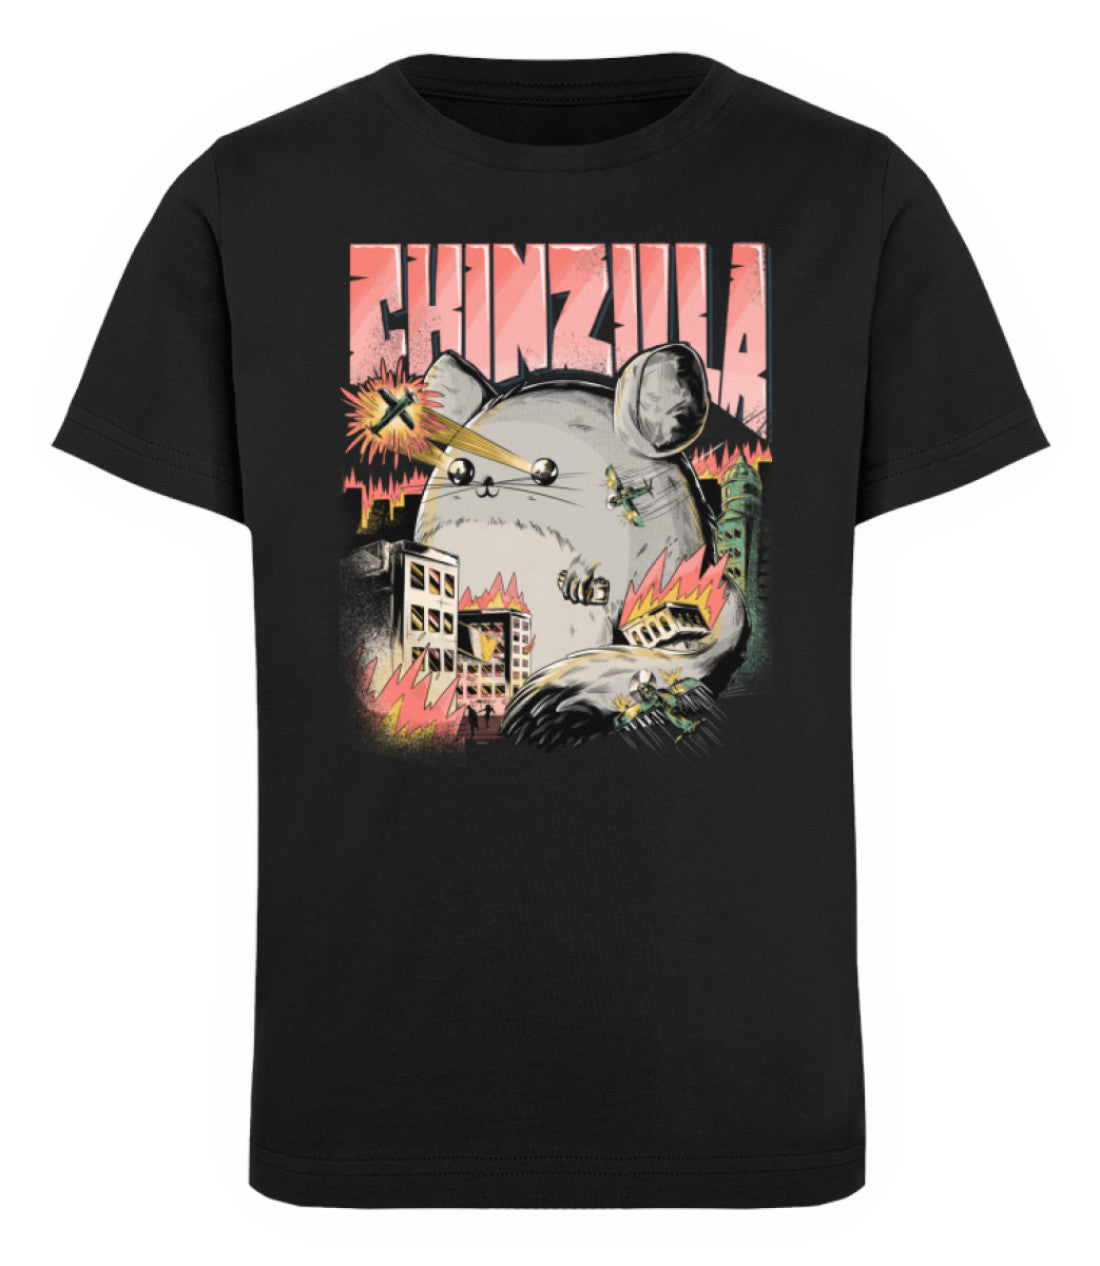 CHINZILLA | Chinchilla | Kinder Bio T-Shirt in Black in Größe 3/4 (98/104)